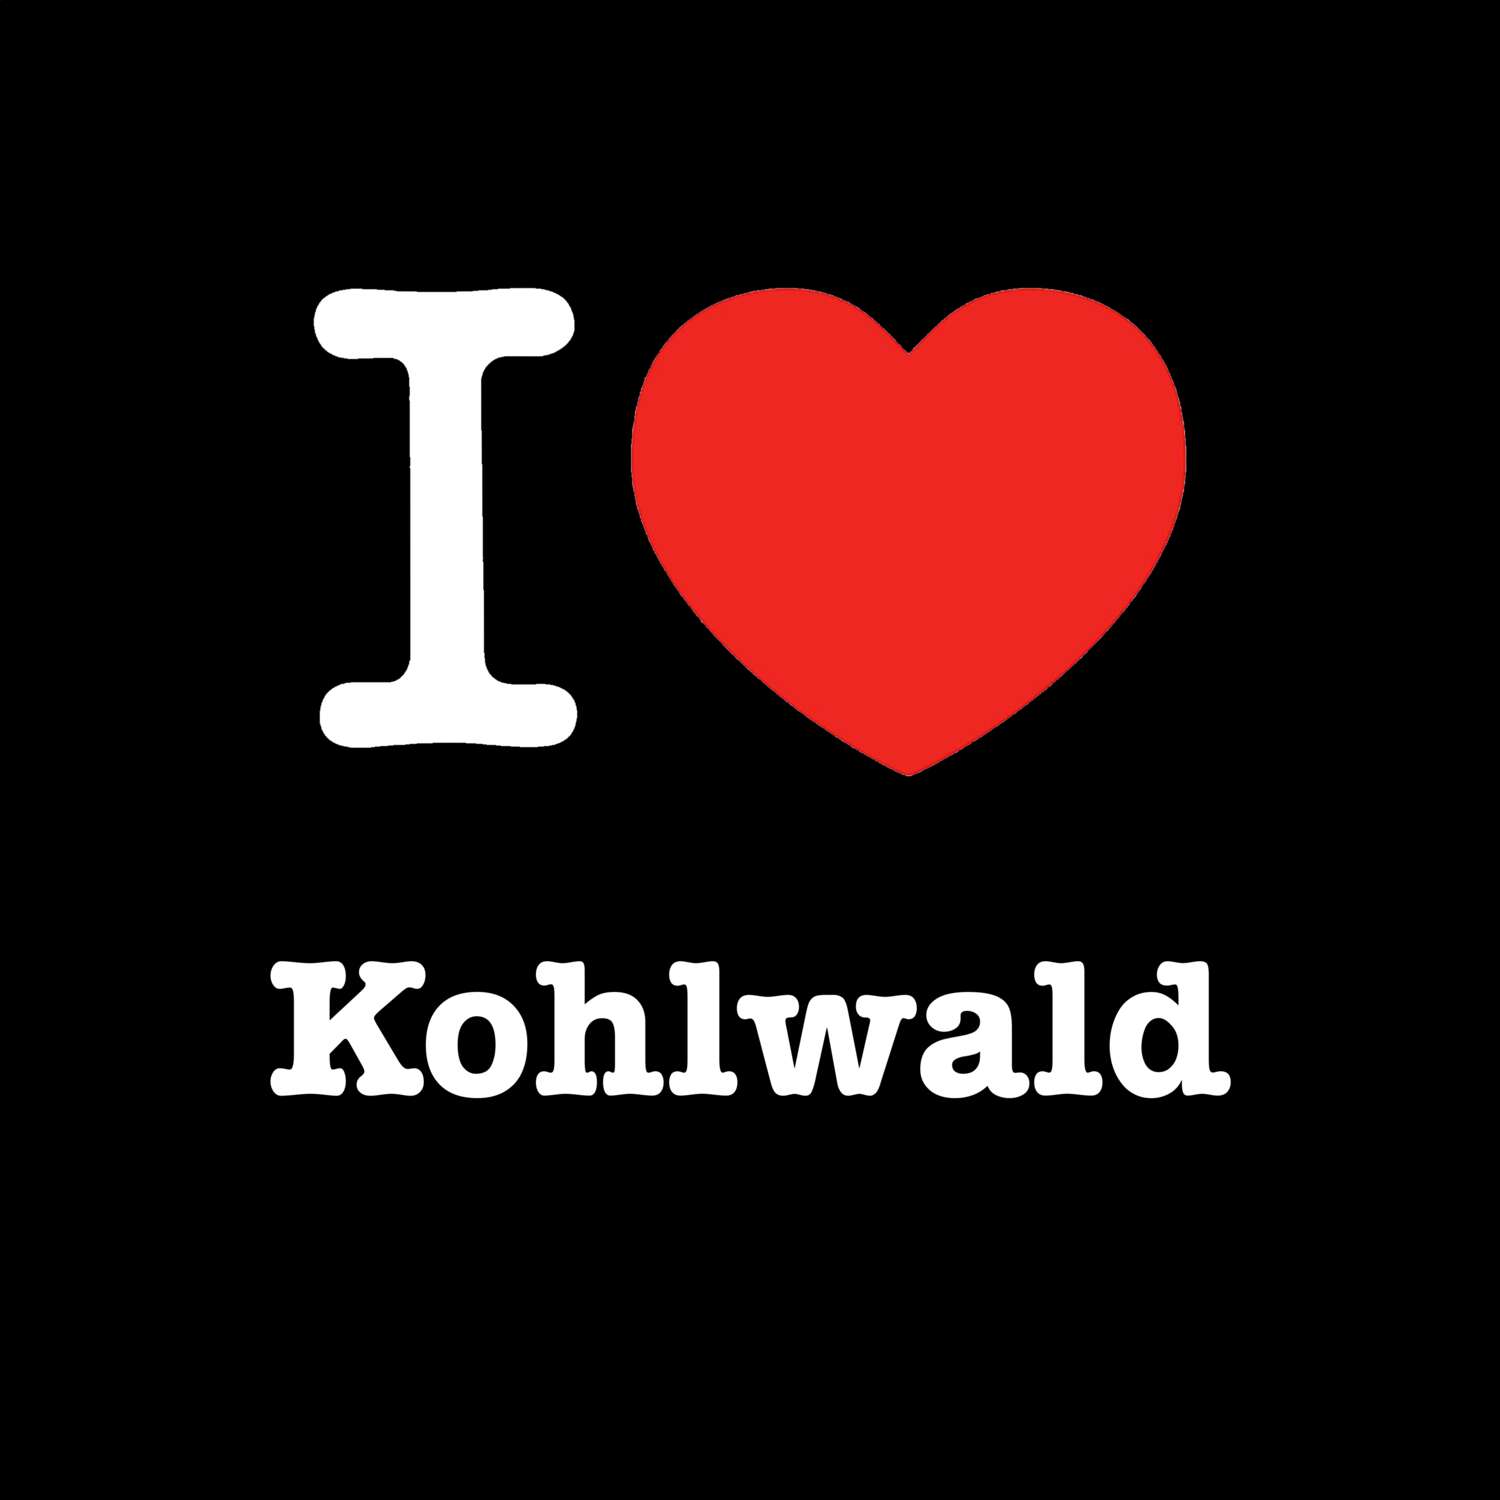 Kohlwald T-Shirt »I love«